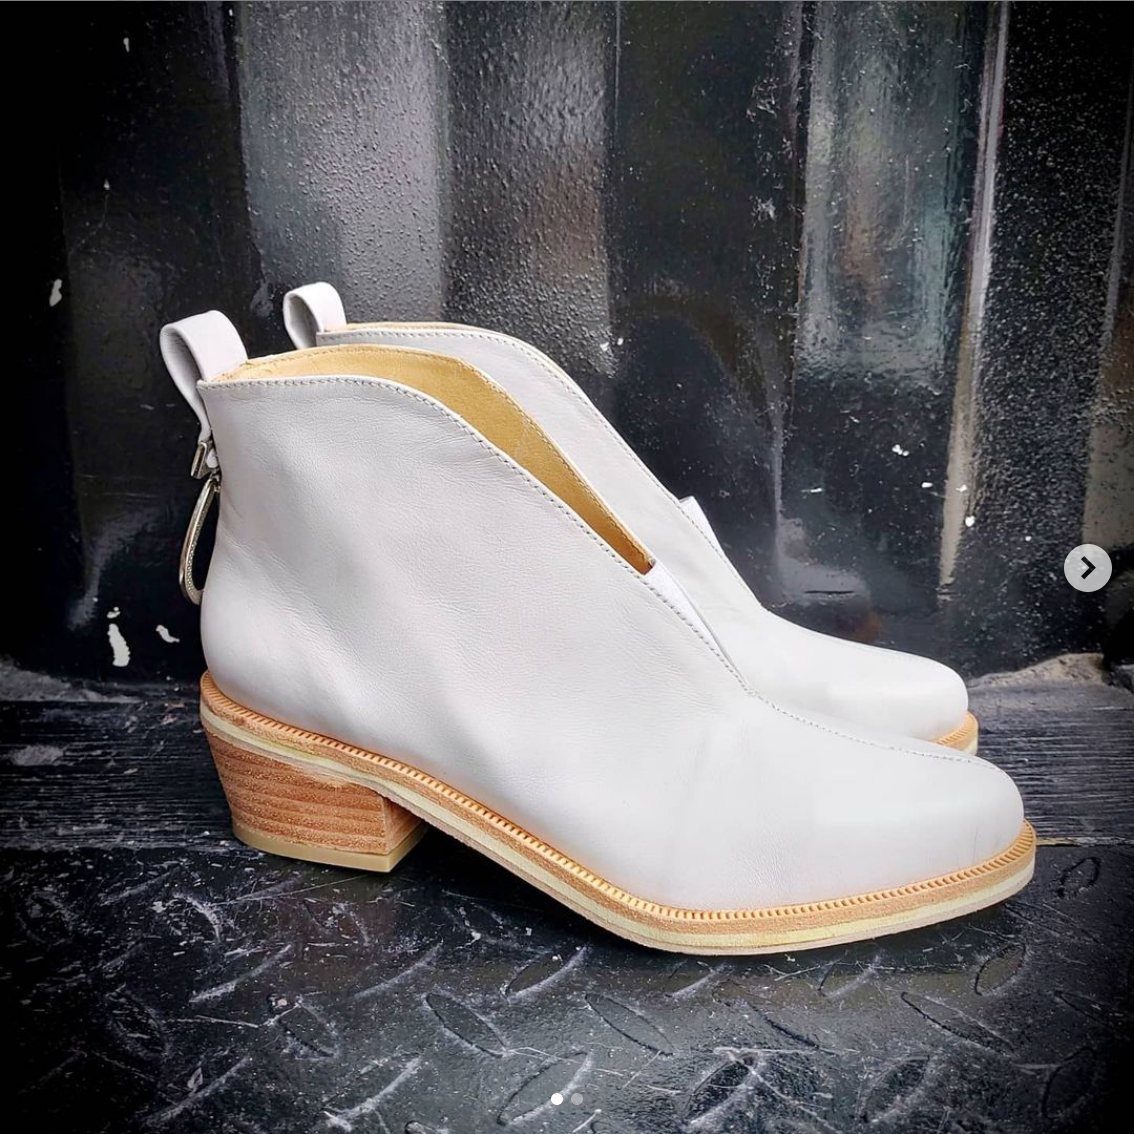 Giantino Shoes – Emilio Lamarca 554, Flores – Ropa por mayor Avellaneda Moda